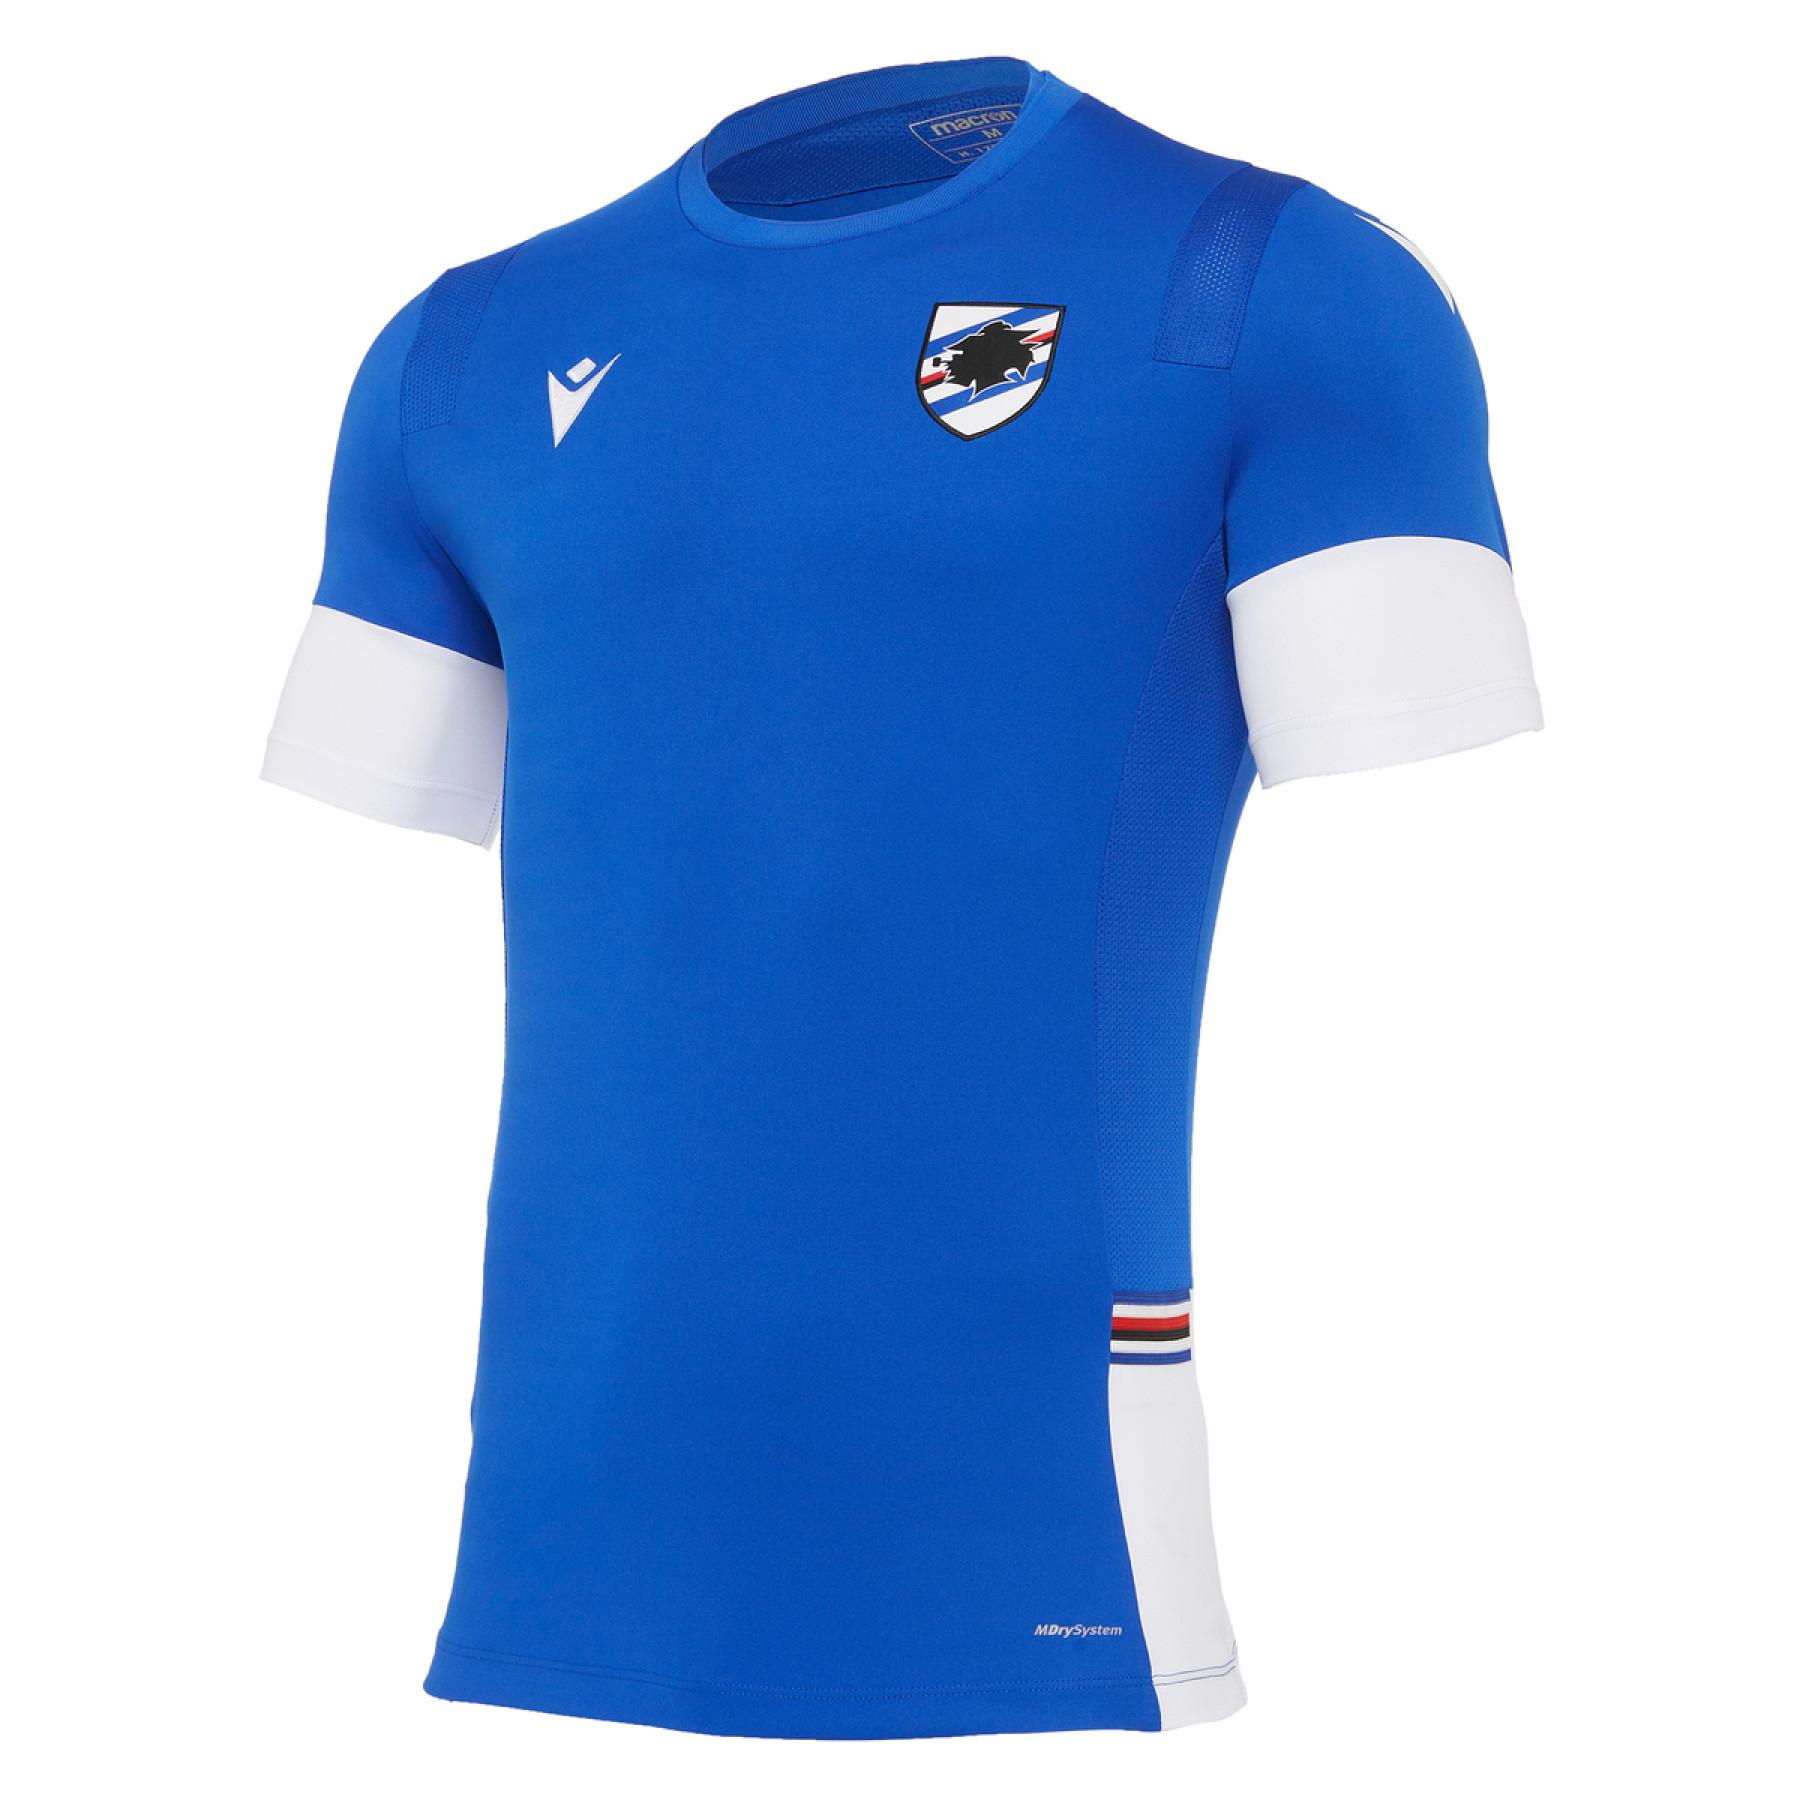 T-shirt sostenitore UC Sampdoria 2020/21